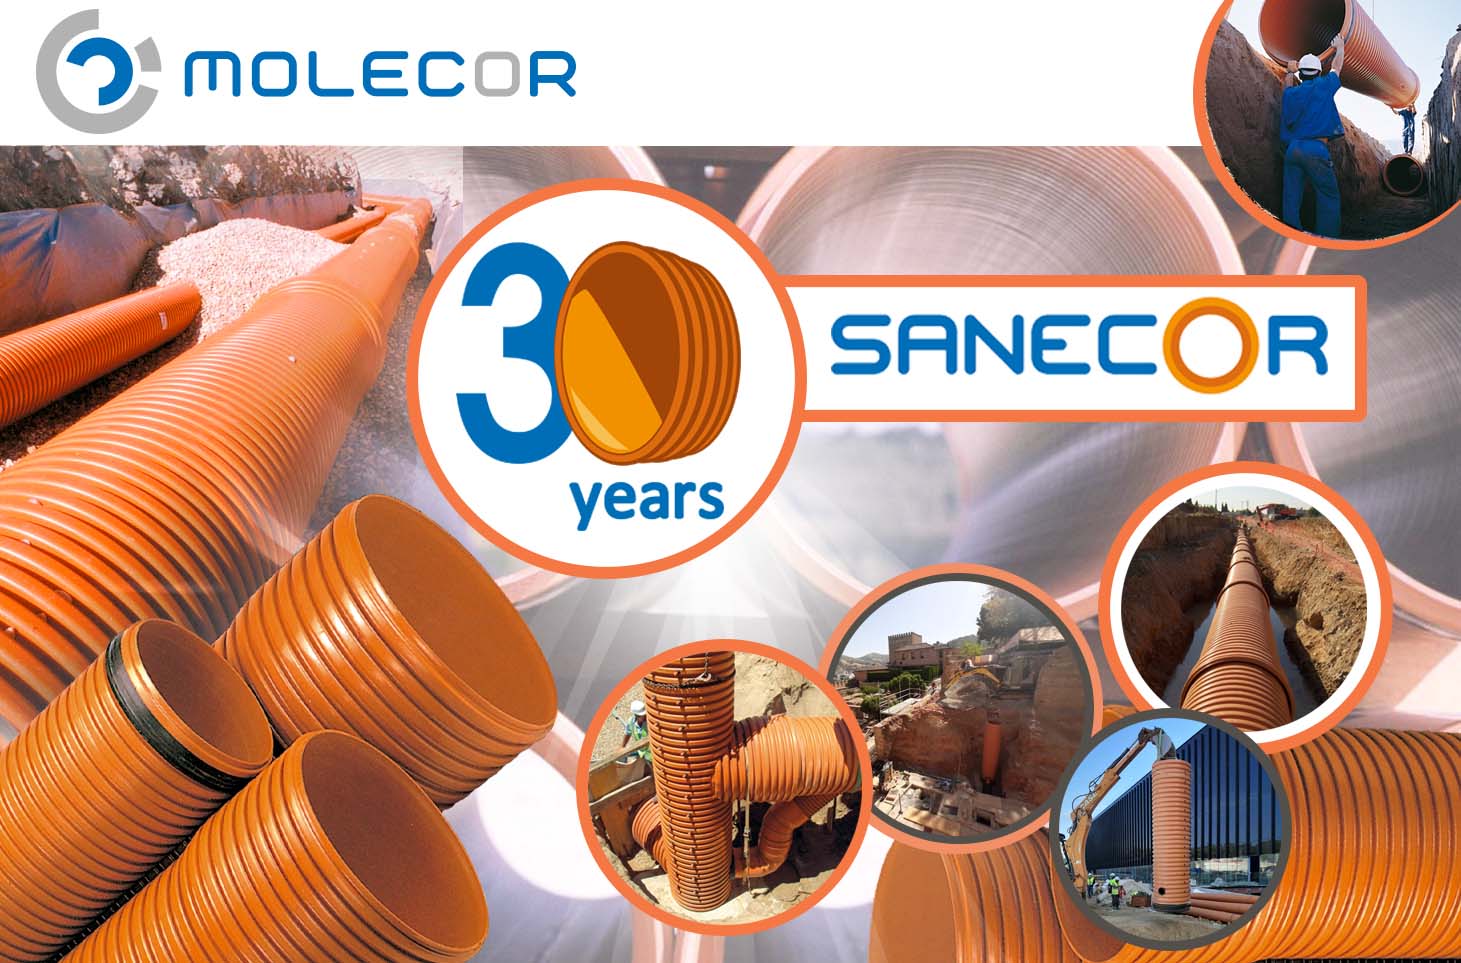 Molecor Sanecor® pipe celebrates 30 years